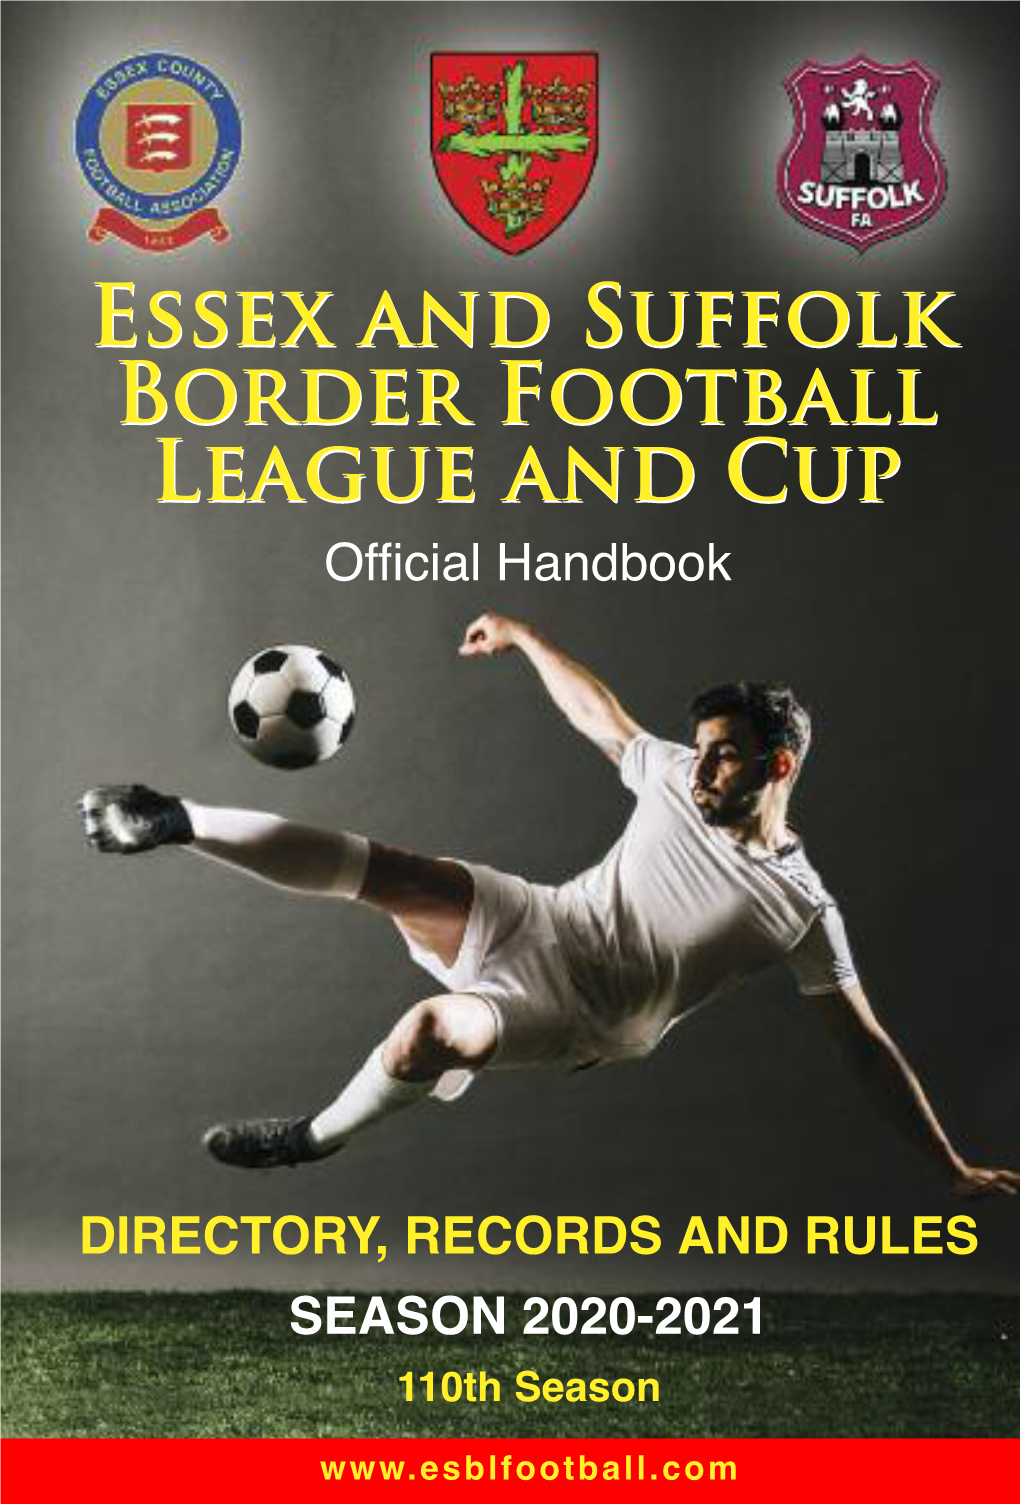 League Handbook